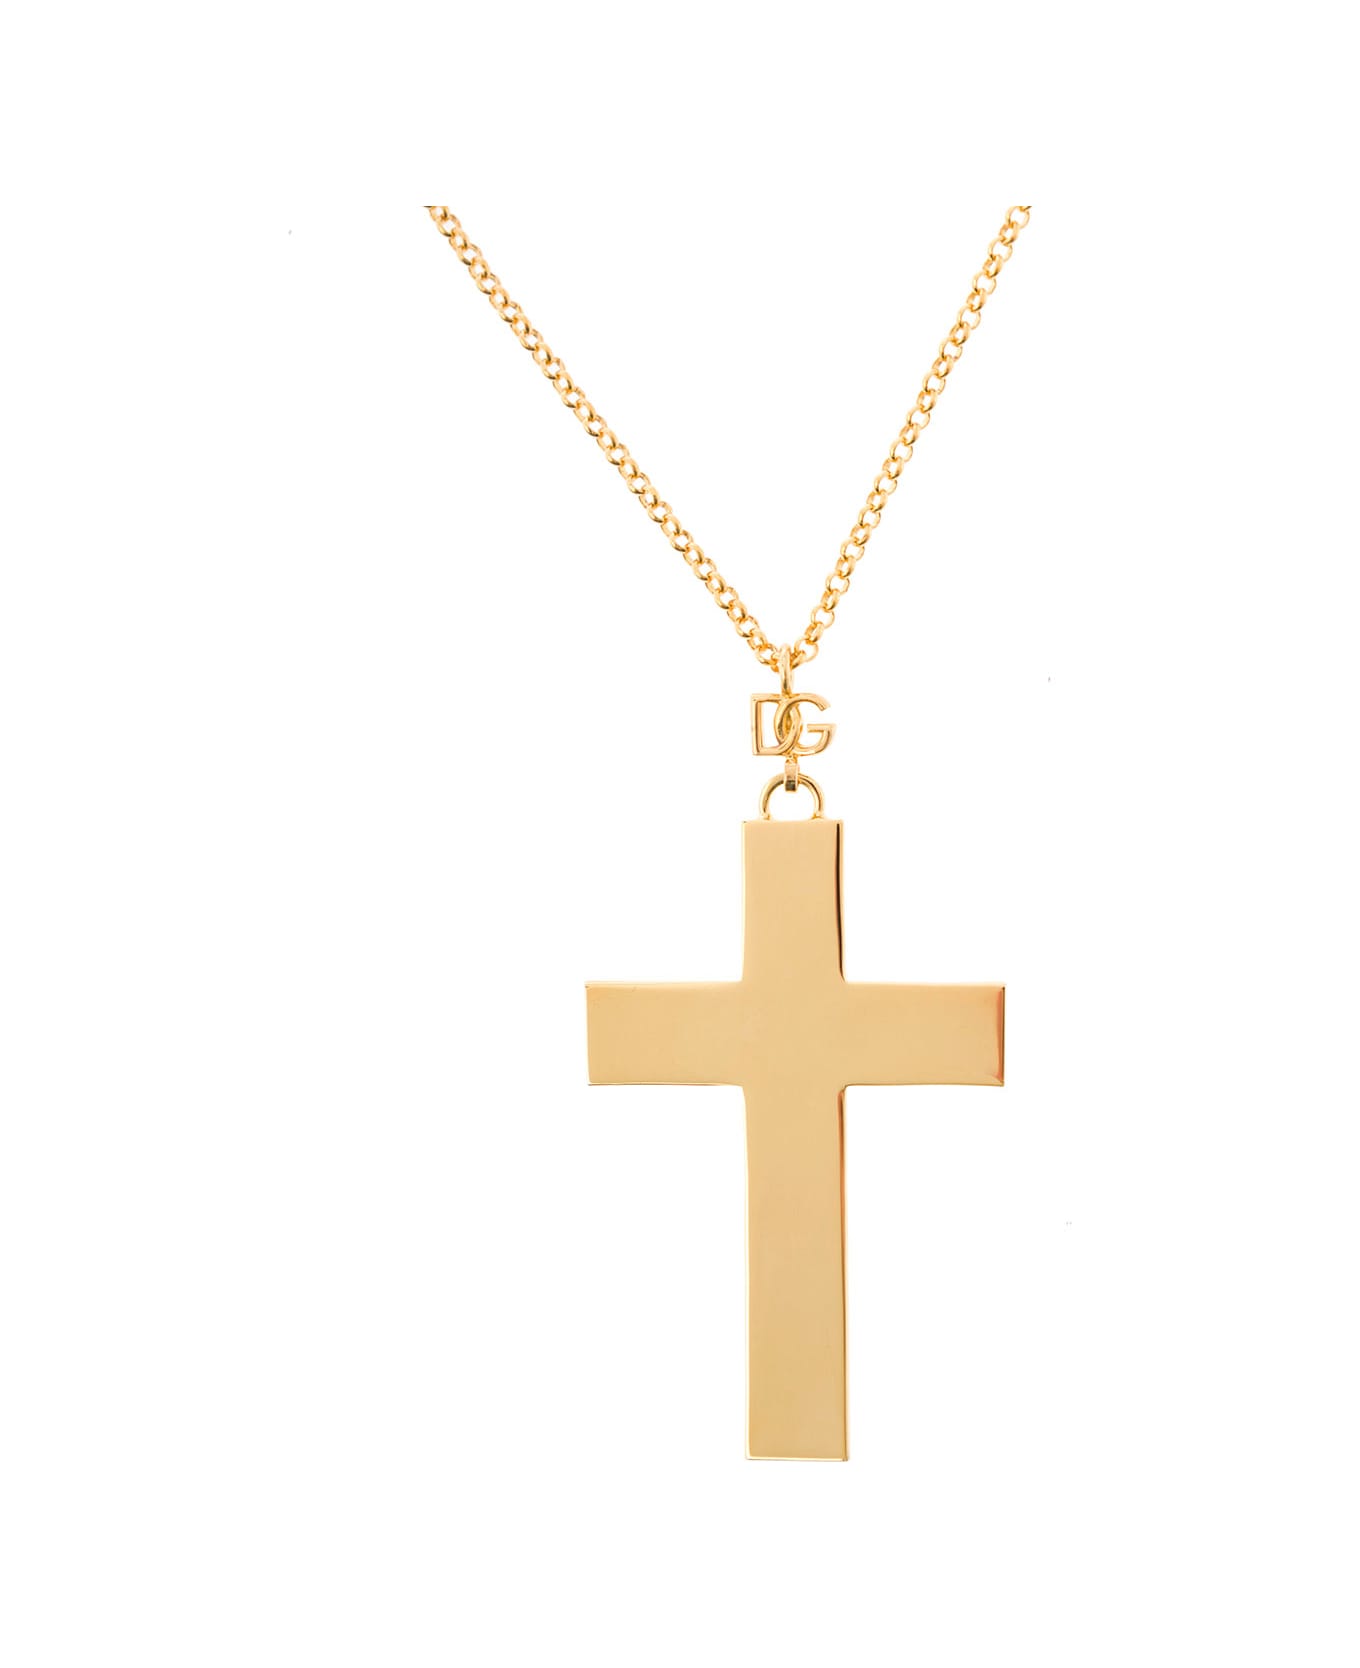 Dolce Einreihiges & Gabbana Cross Pendant Necklace - Metallic